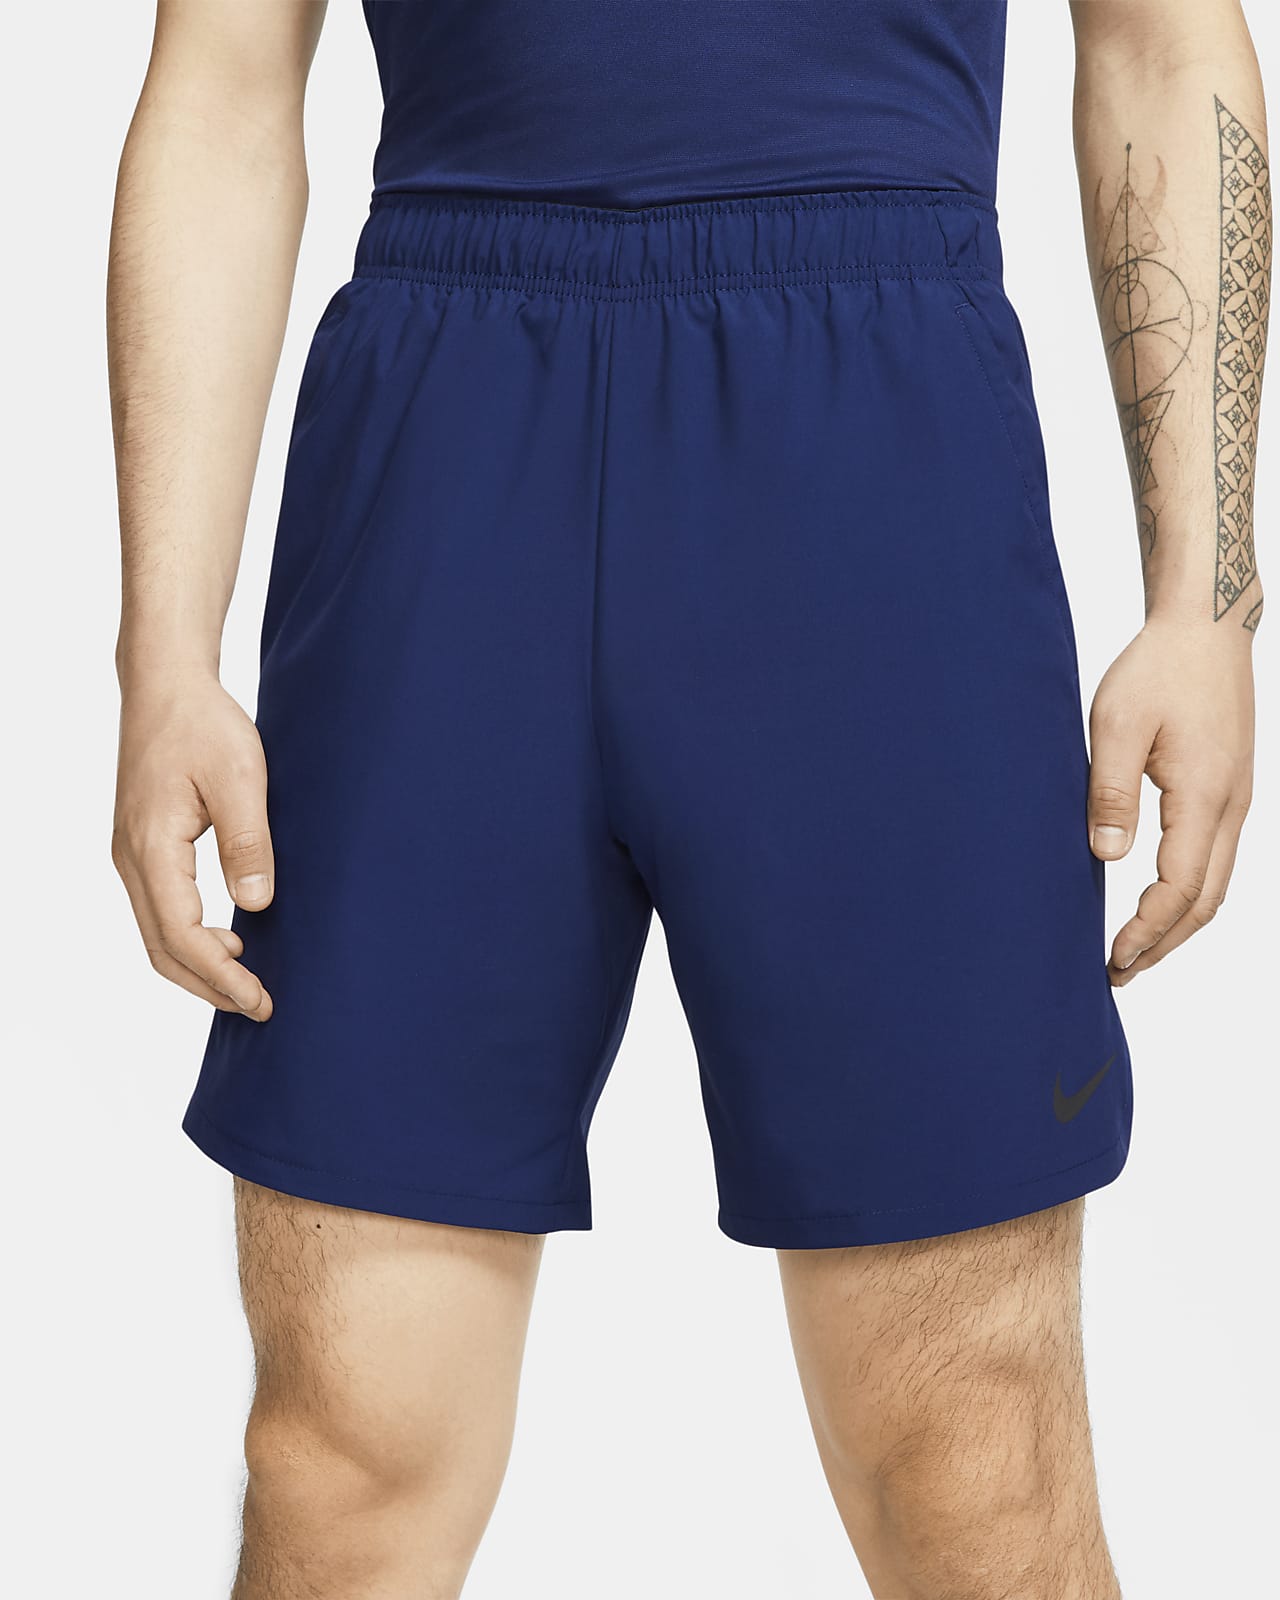 nike men's flex woven 2. training shorts